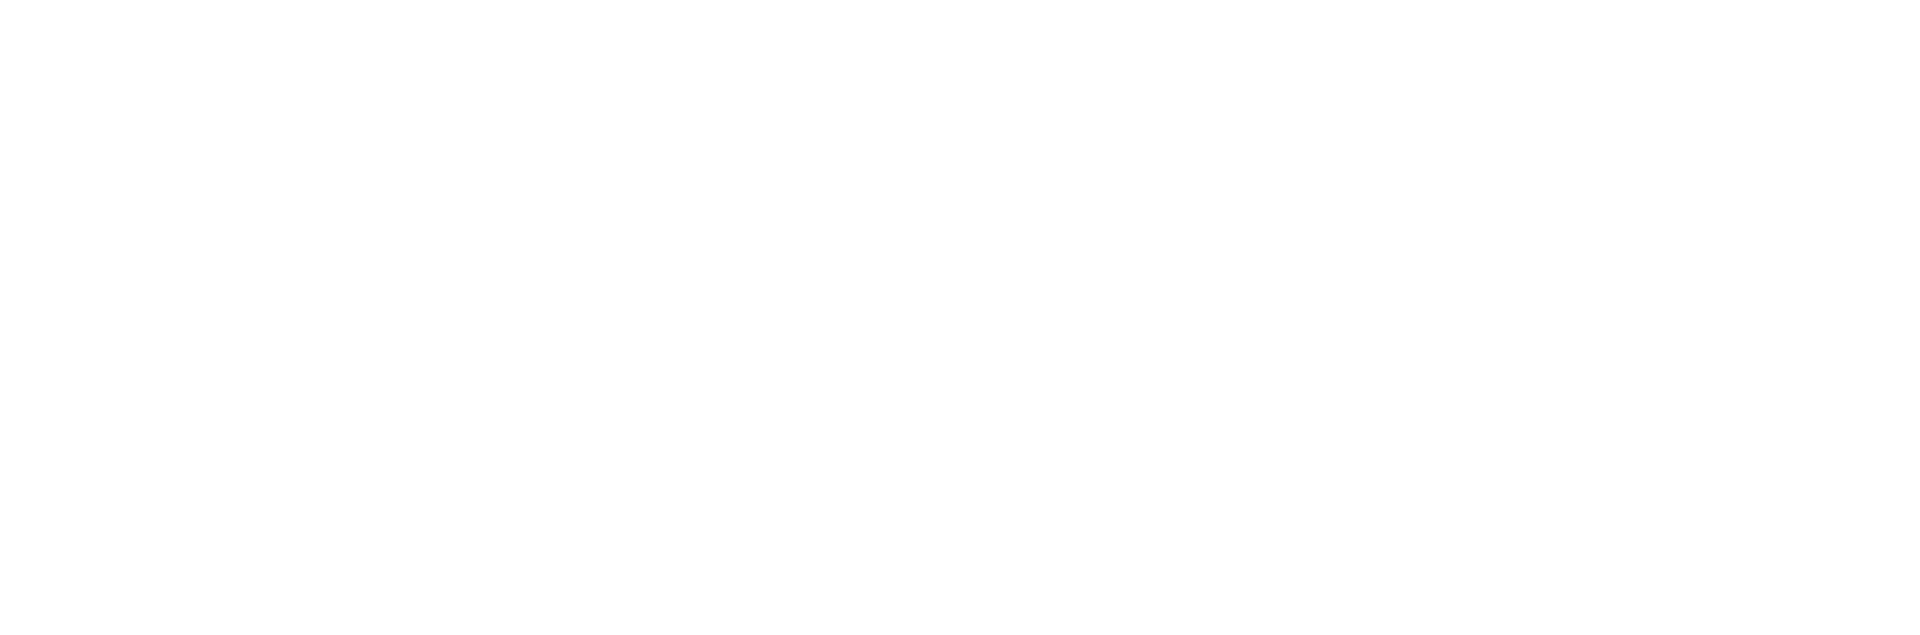 La Petite Bretagne, Original French Crepes, Restaurant